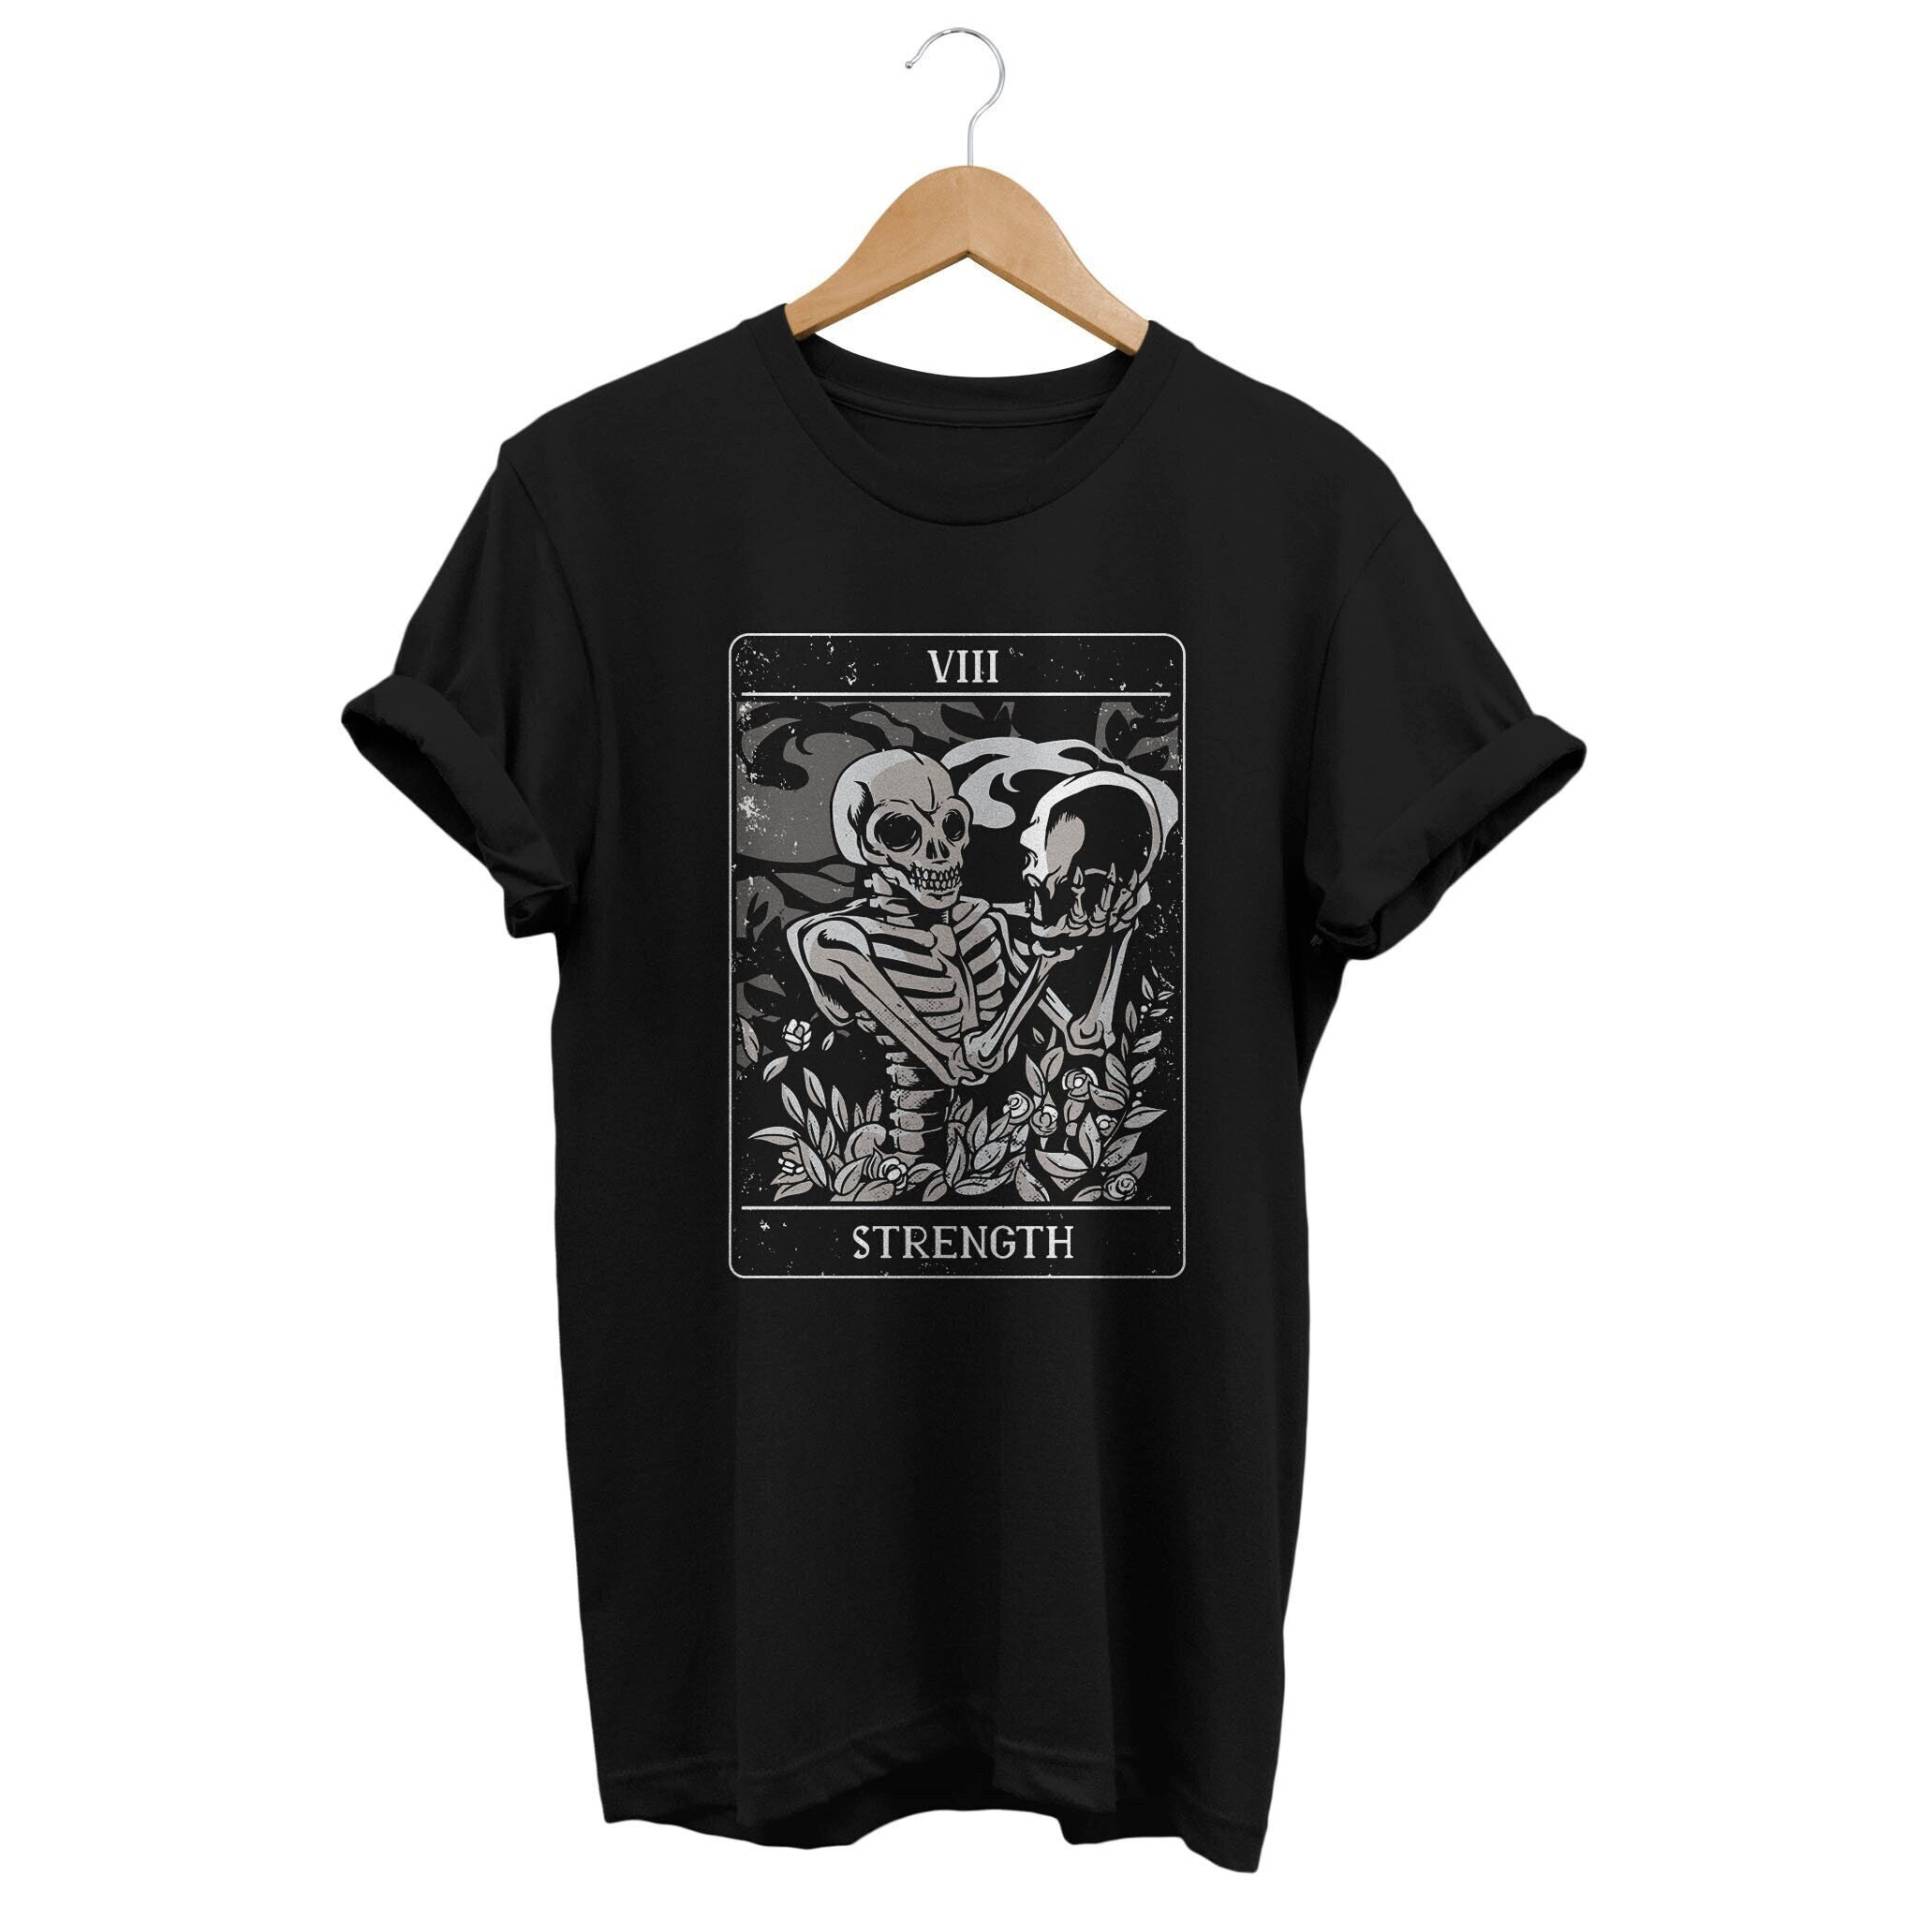 stärke Tarot T-Shirt, Alternative Kleidung, Grunge Gothic Shirt, Goth Top, Okkultismus Bekleidung, E-Girl Emo Girl von ElephanTees